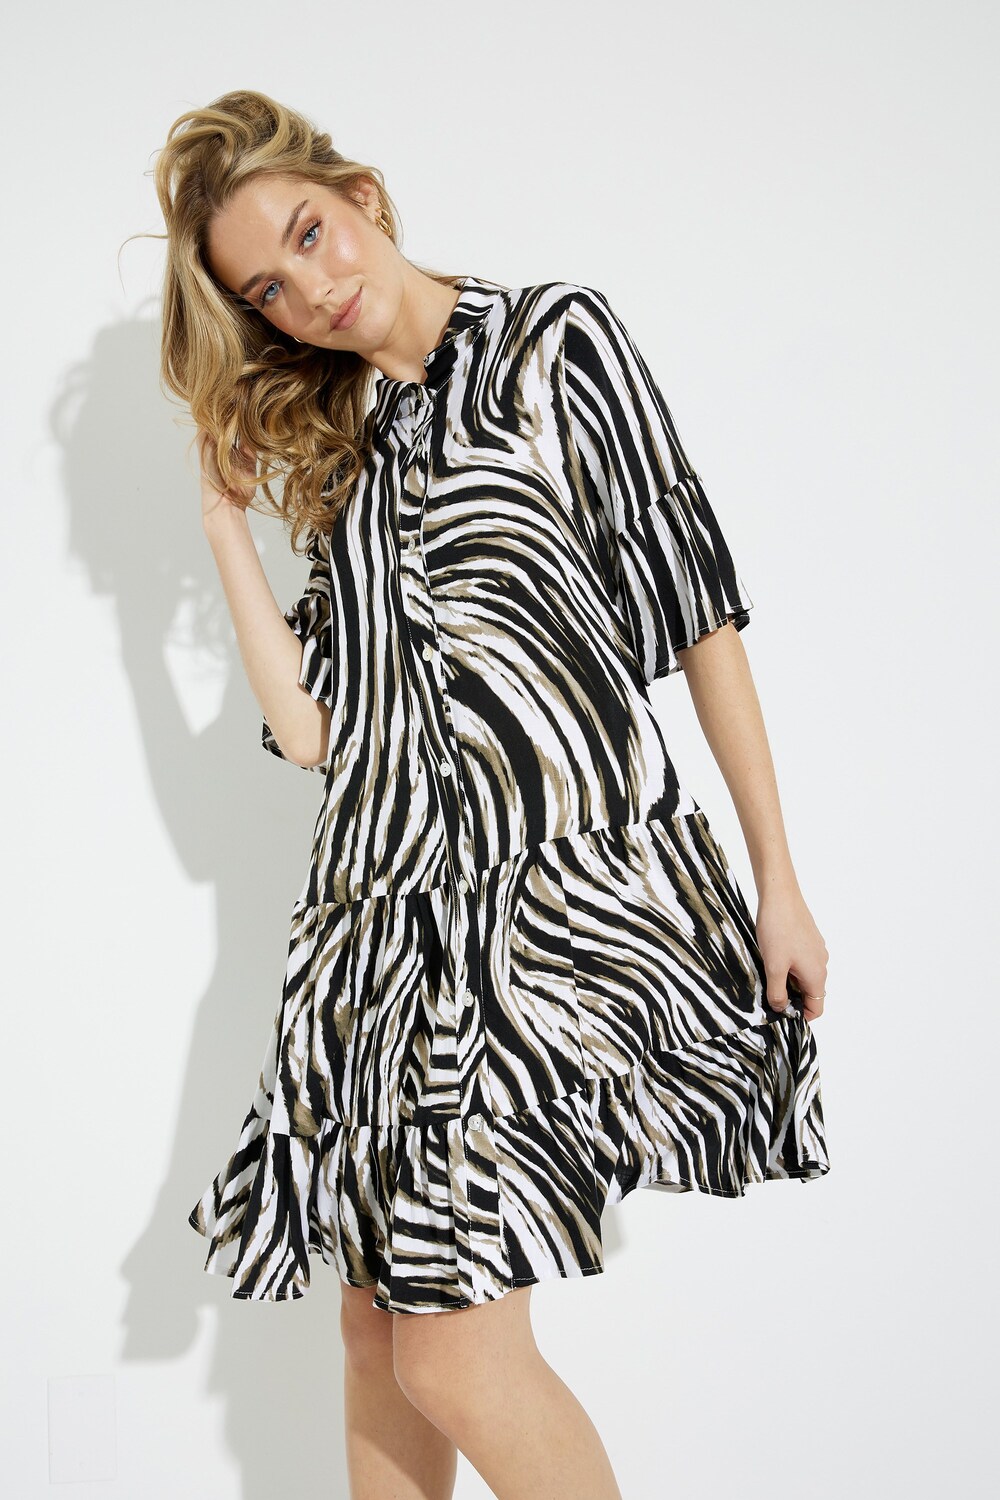 Abstract Print A-Line Dress Style 231134. Vanilla/multi